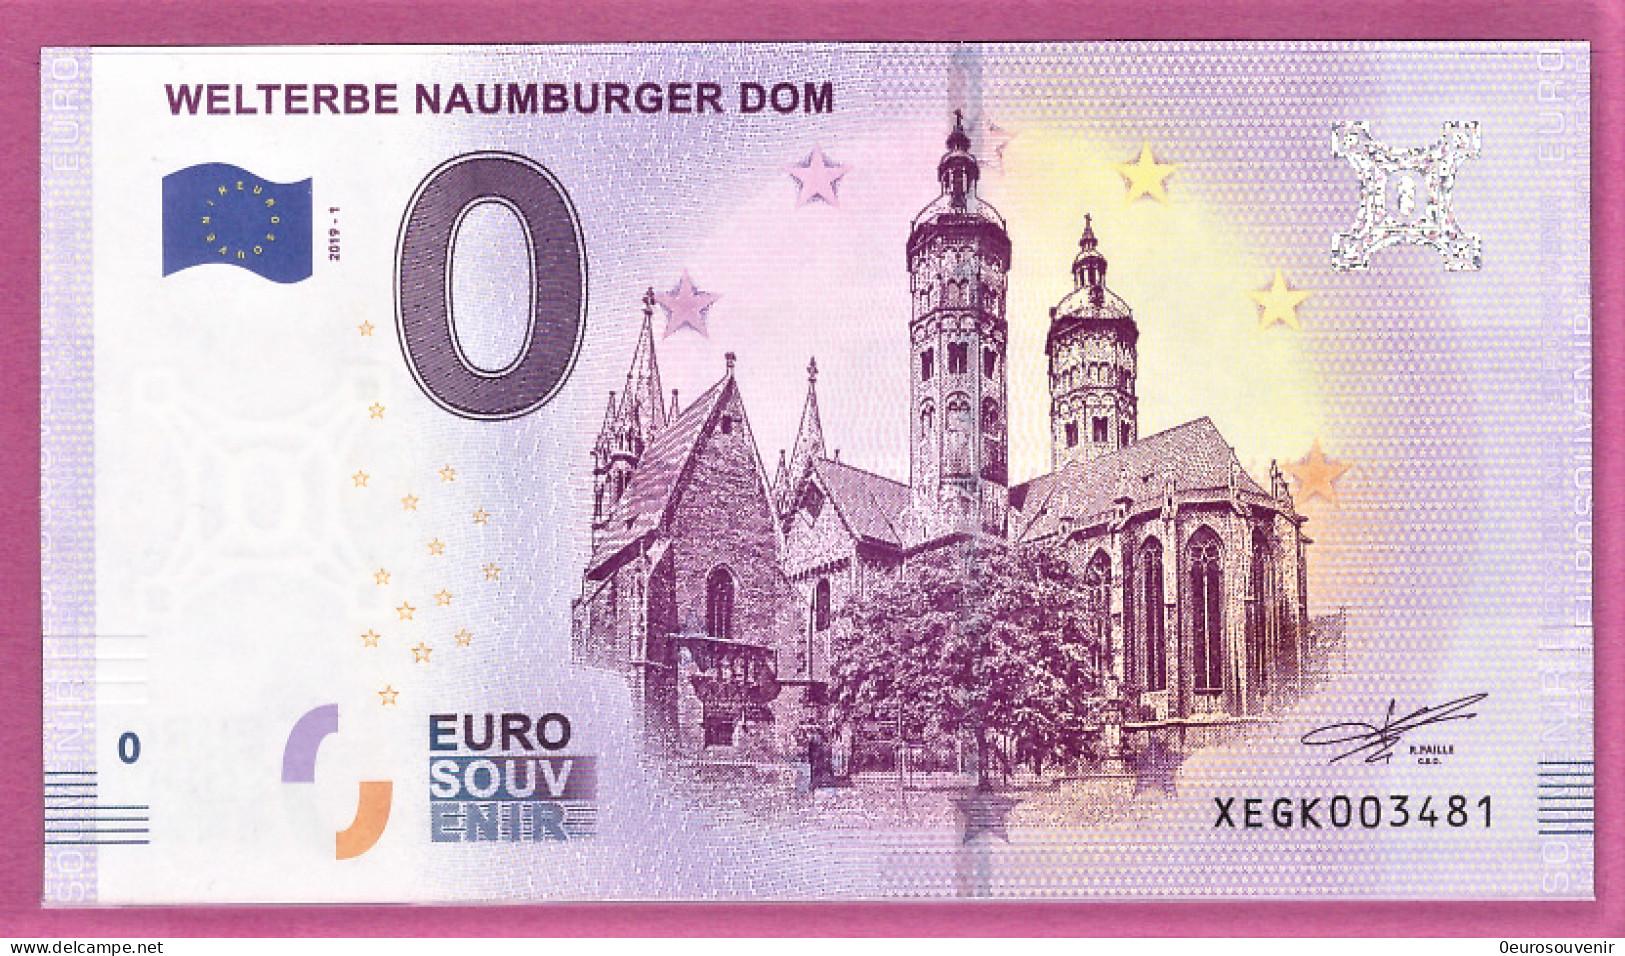 0-Euro XEGK 2019-1 WELTERBE NAUMBURGER DOM - Privatentwürfe